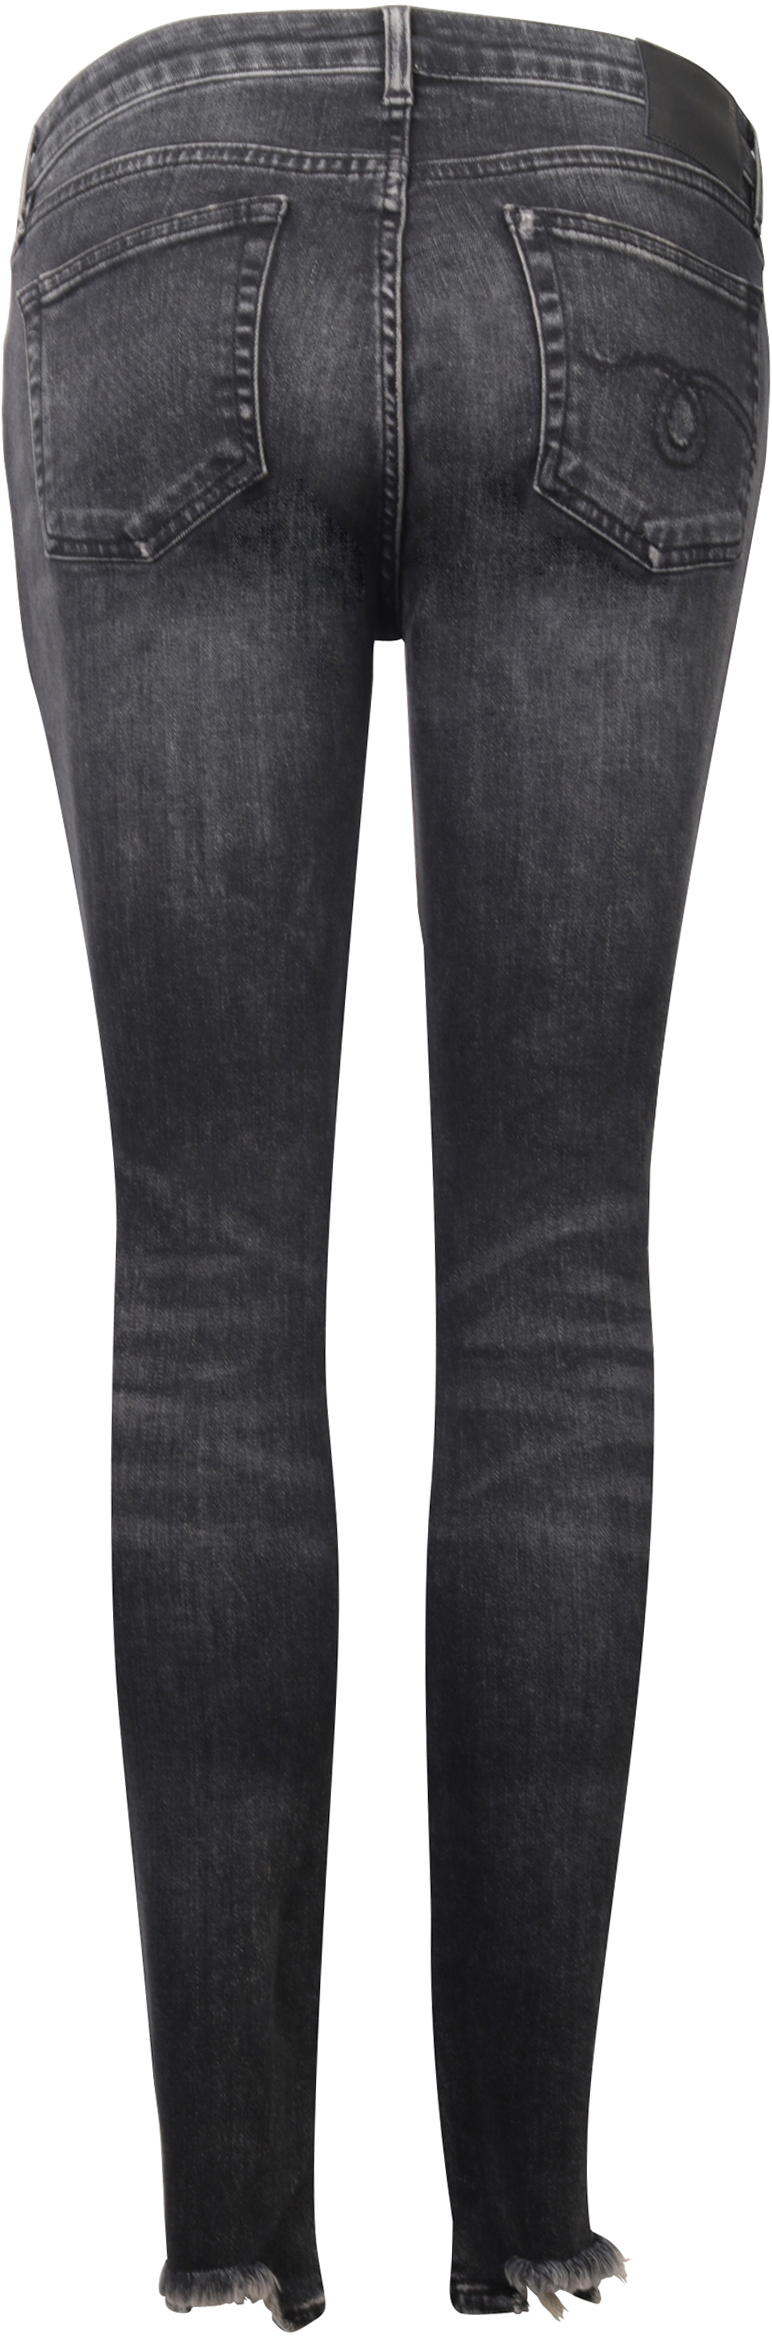 r13 jeans alison schwarz 31